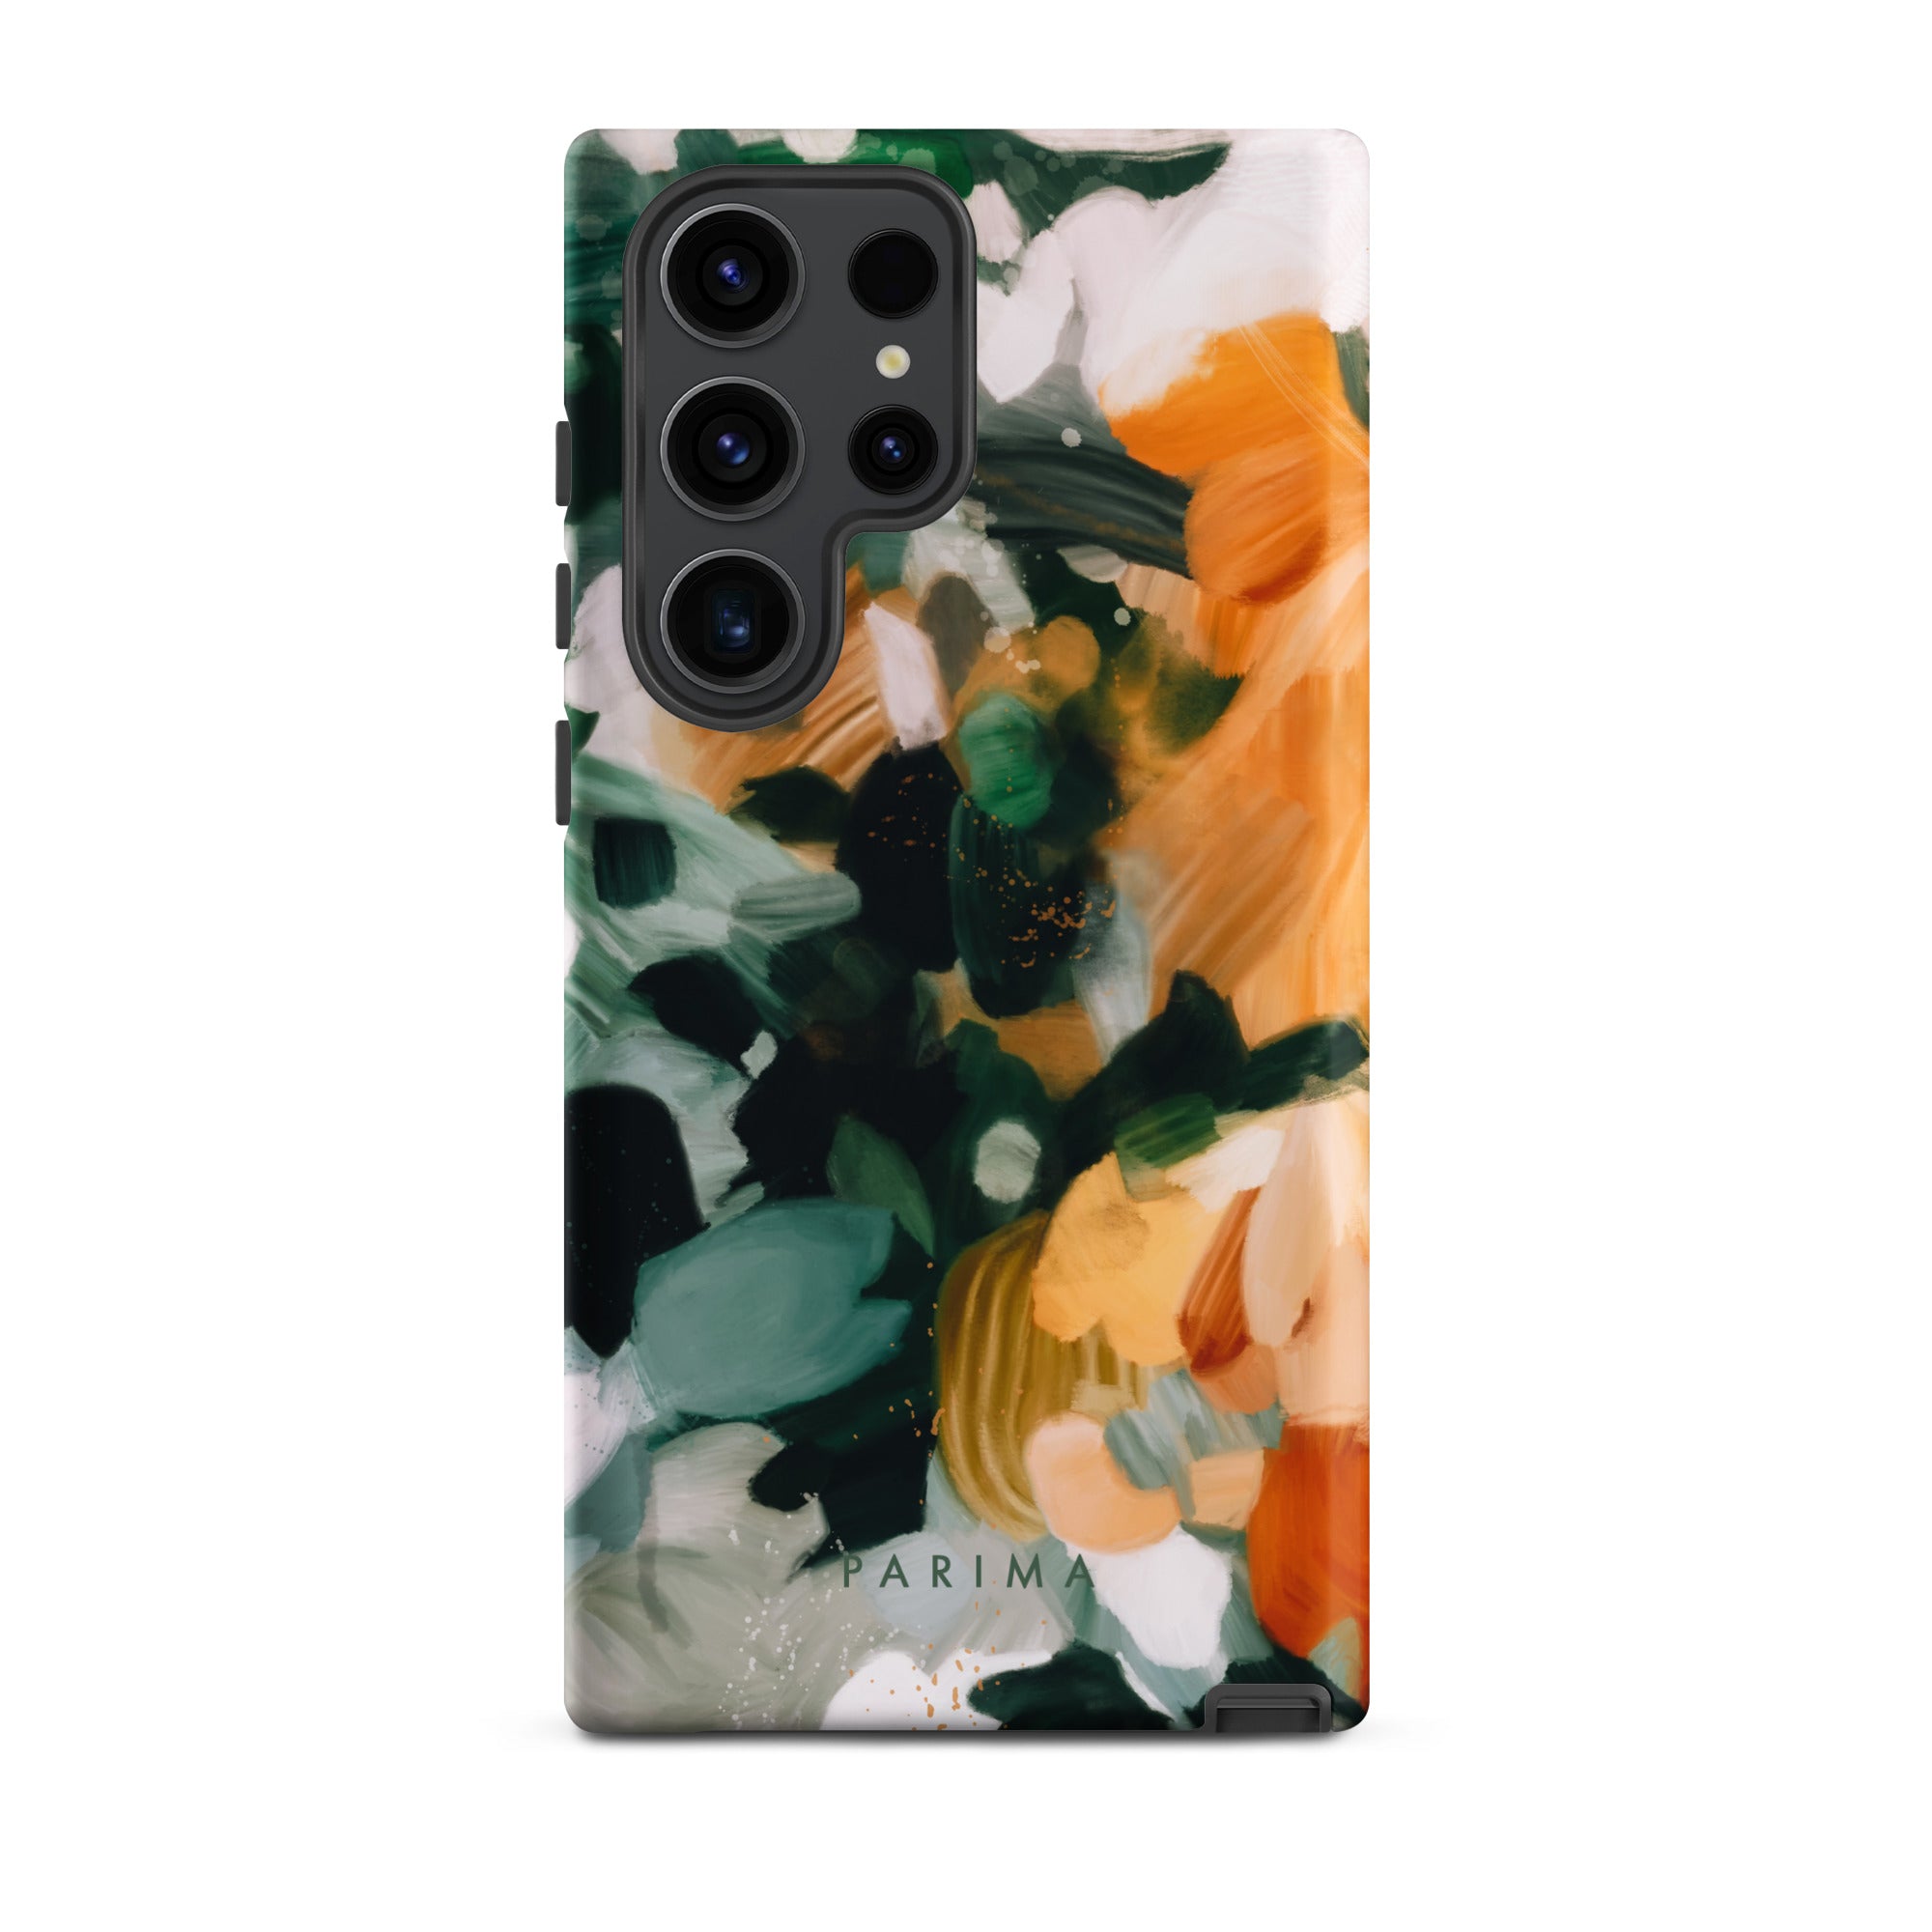 Aspen, green and orange abstract art on Samsung Galaxy S23 Ultra tough case by Parima Studio